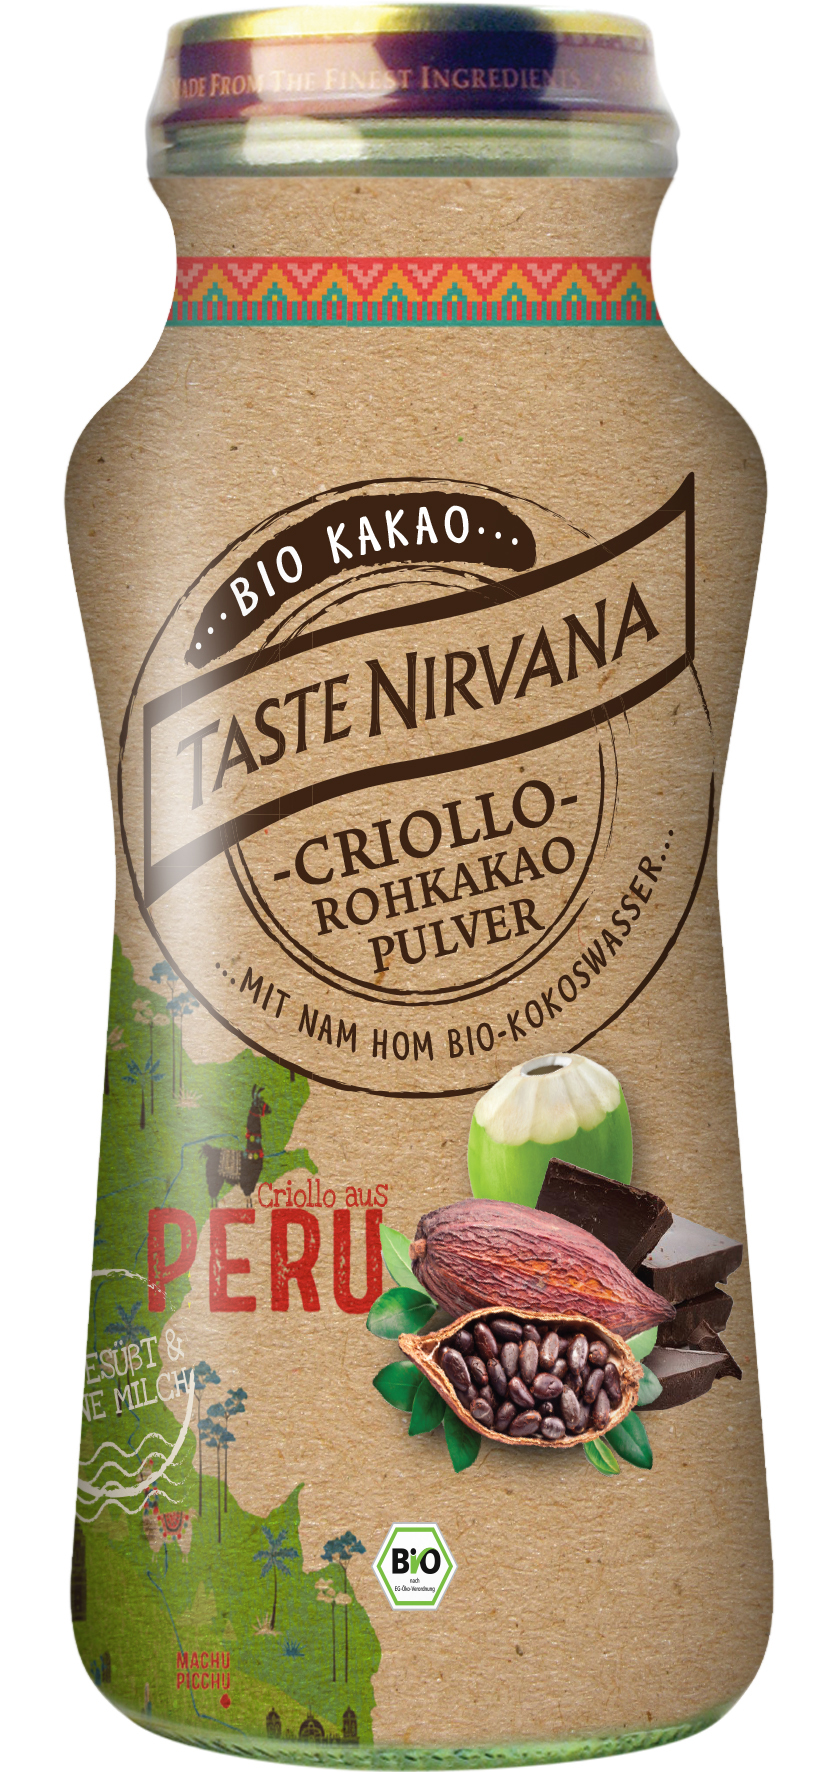 Bio Kakao Taste Nirvana